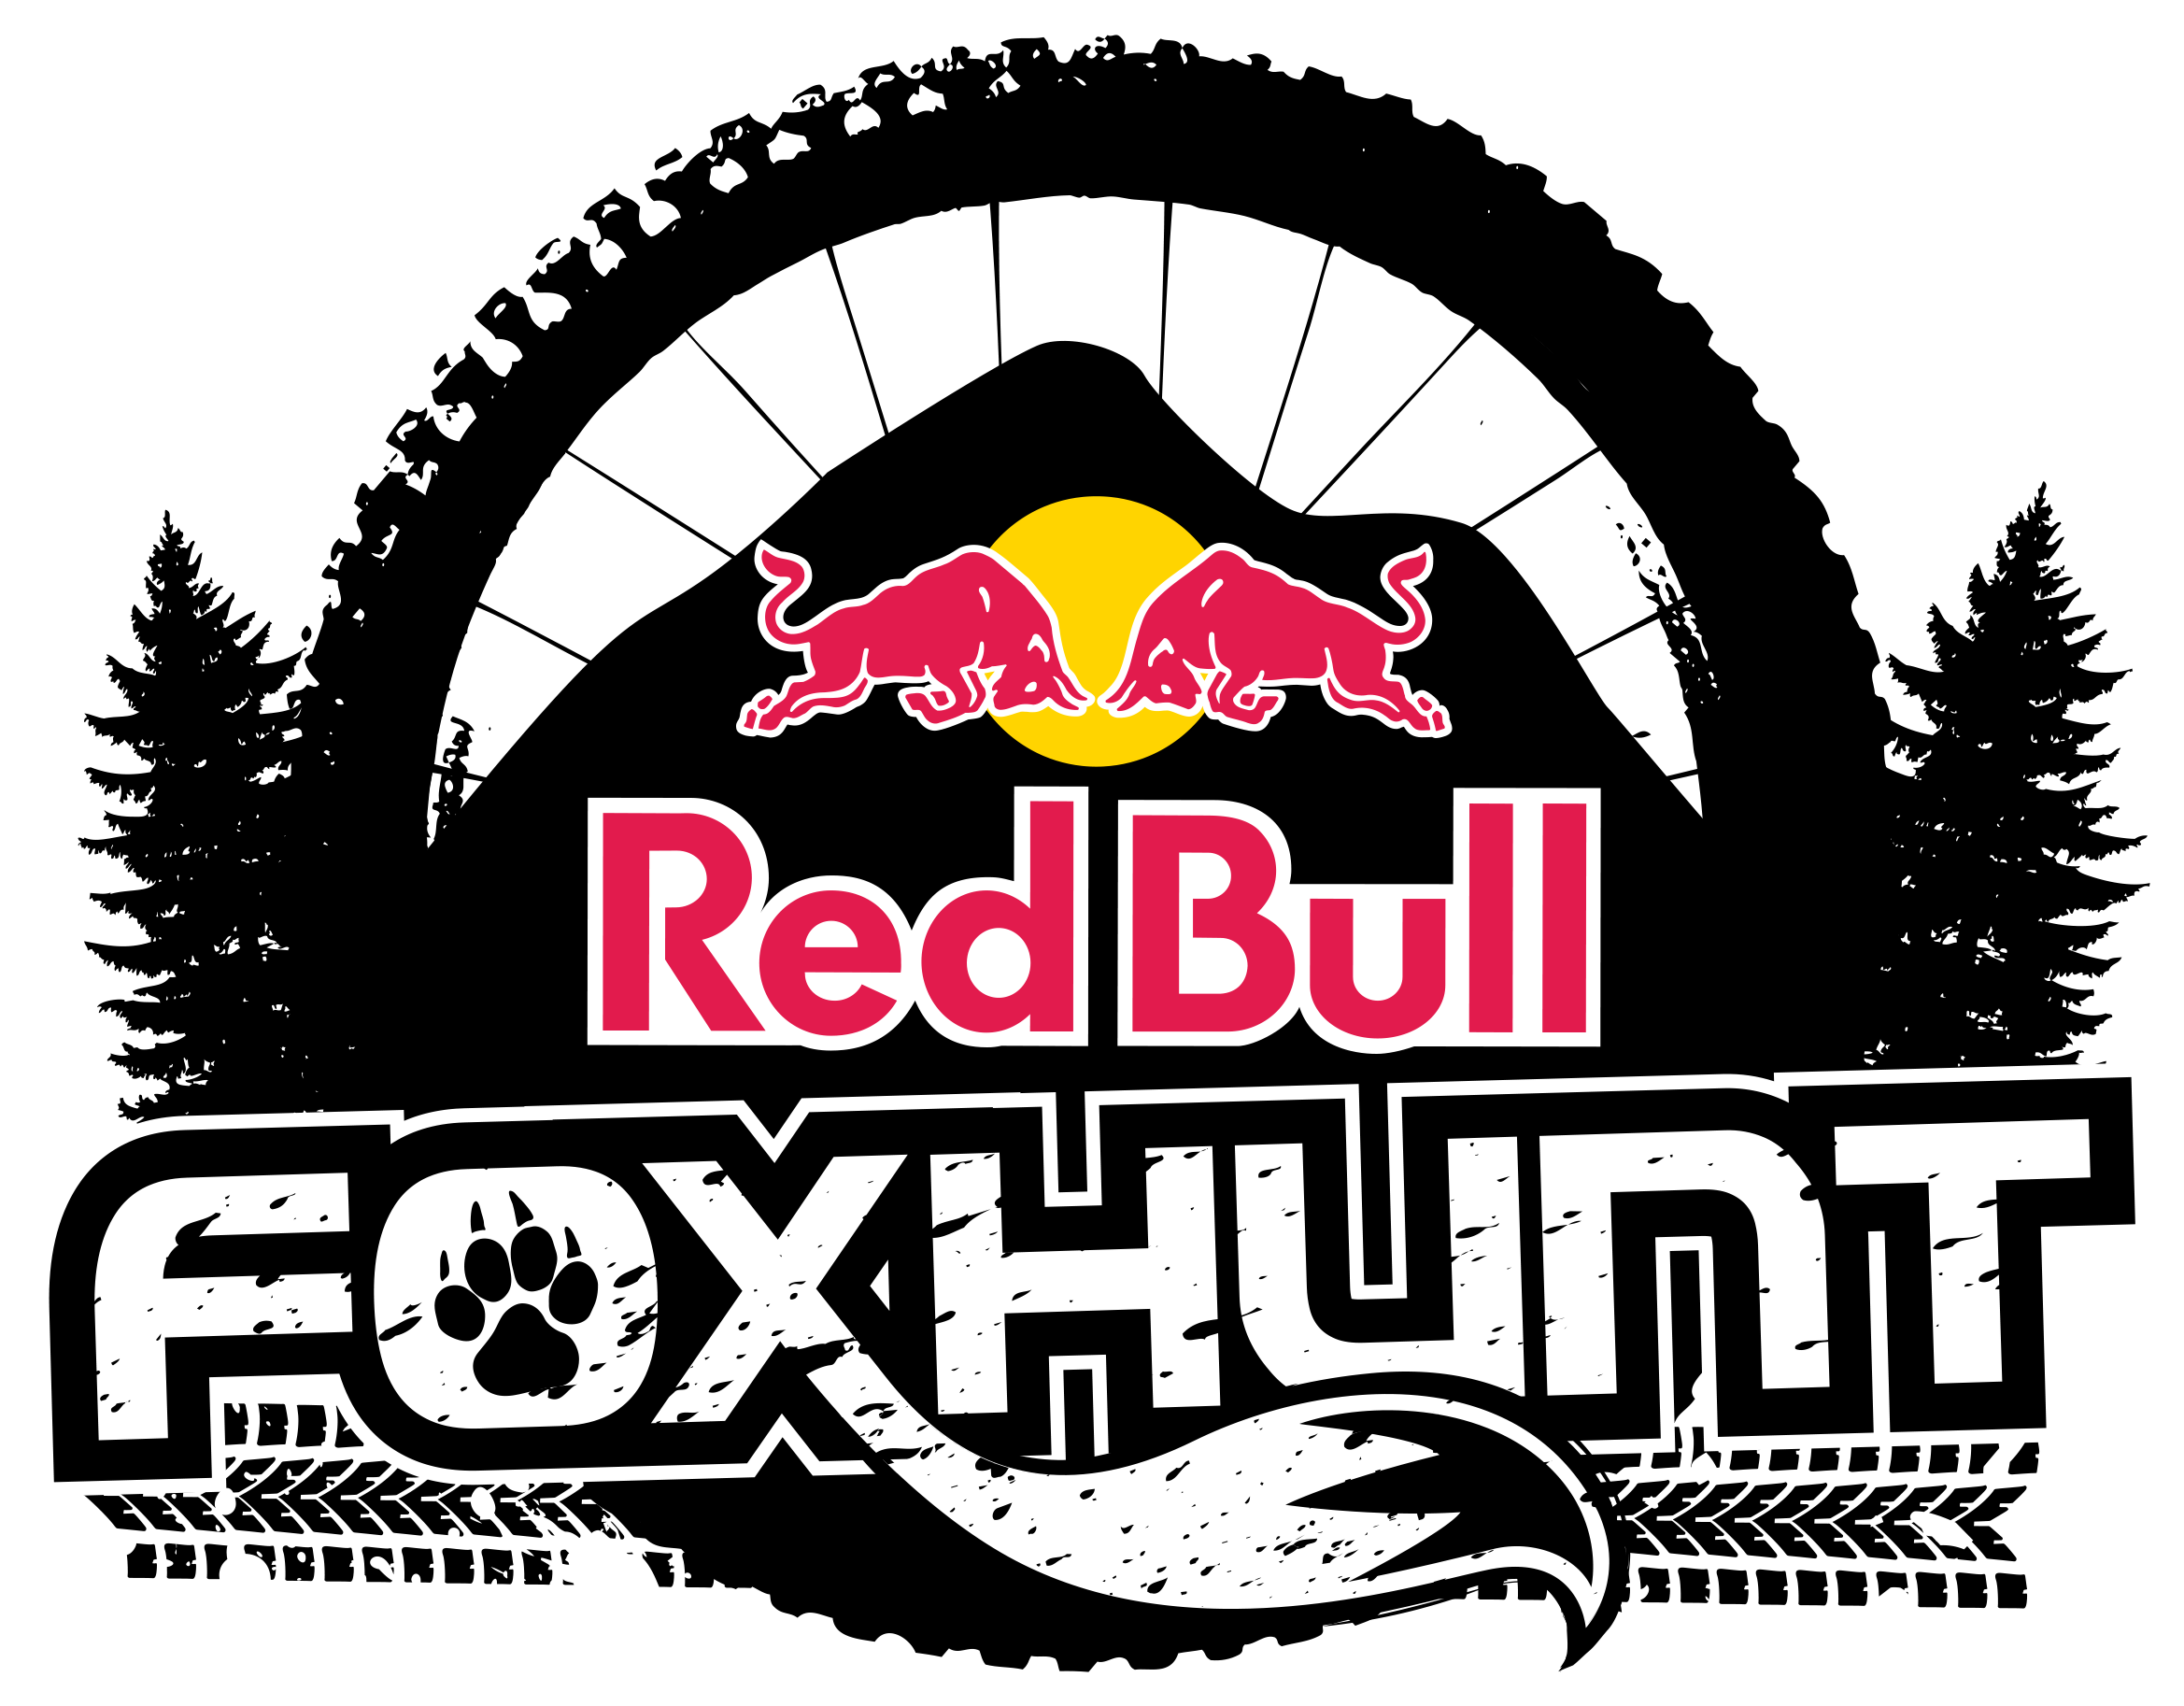 Red Bull Foxhunt - Red Bull Fox Hunt Logo (3000x2551)